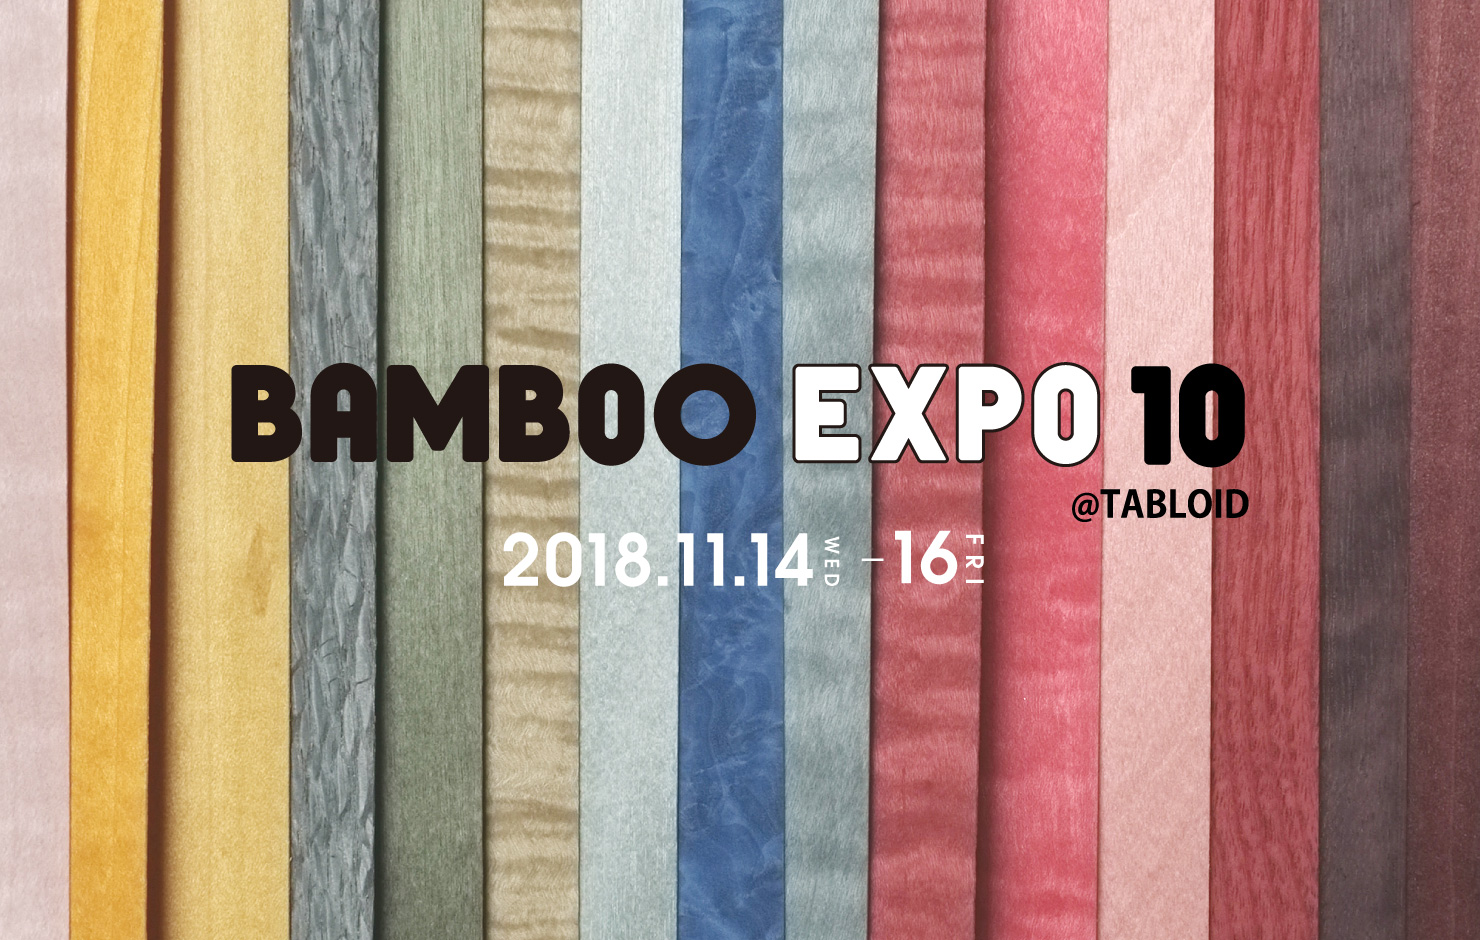 BAMBOO EXPO 10 @TABLOID 2018.11.14 WED-16 FRI